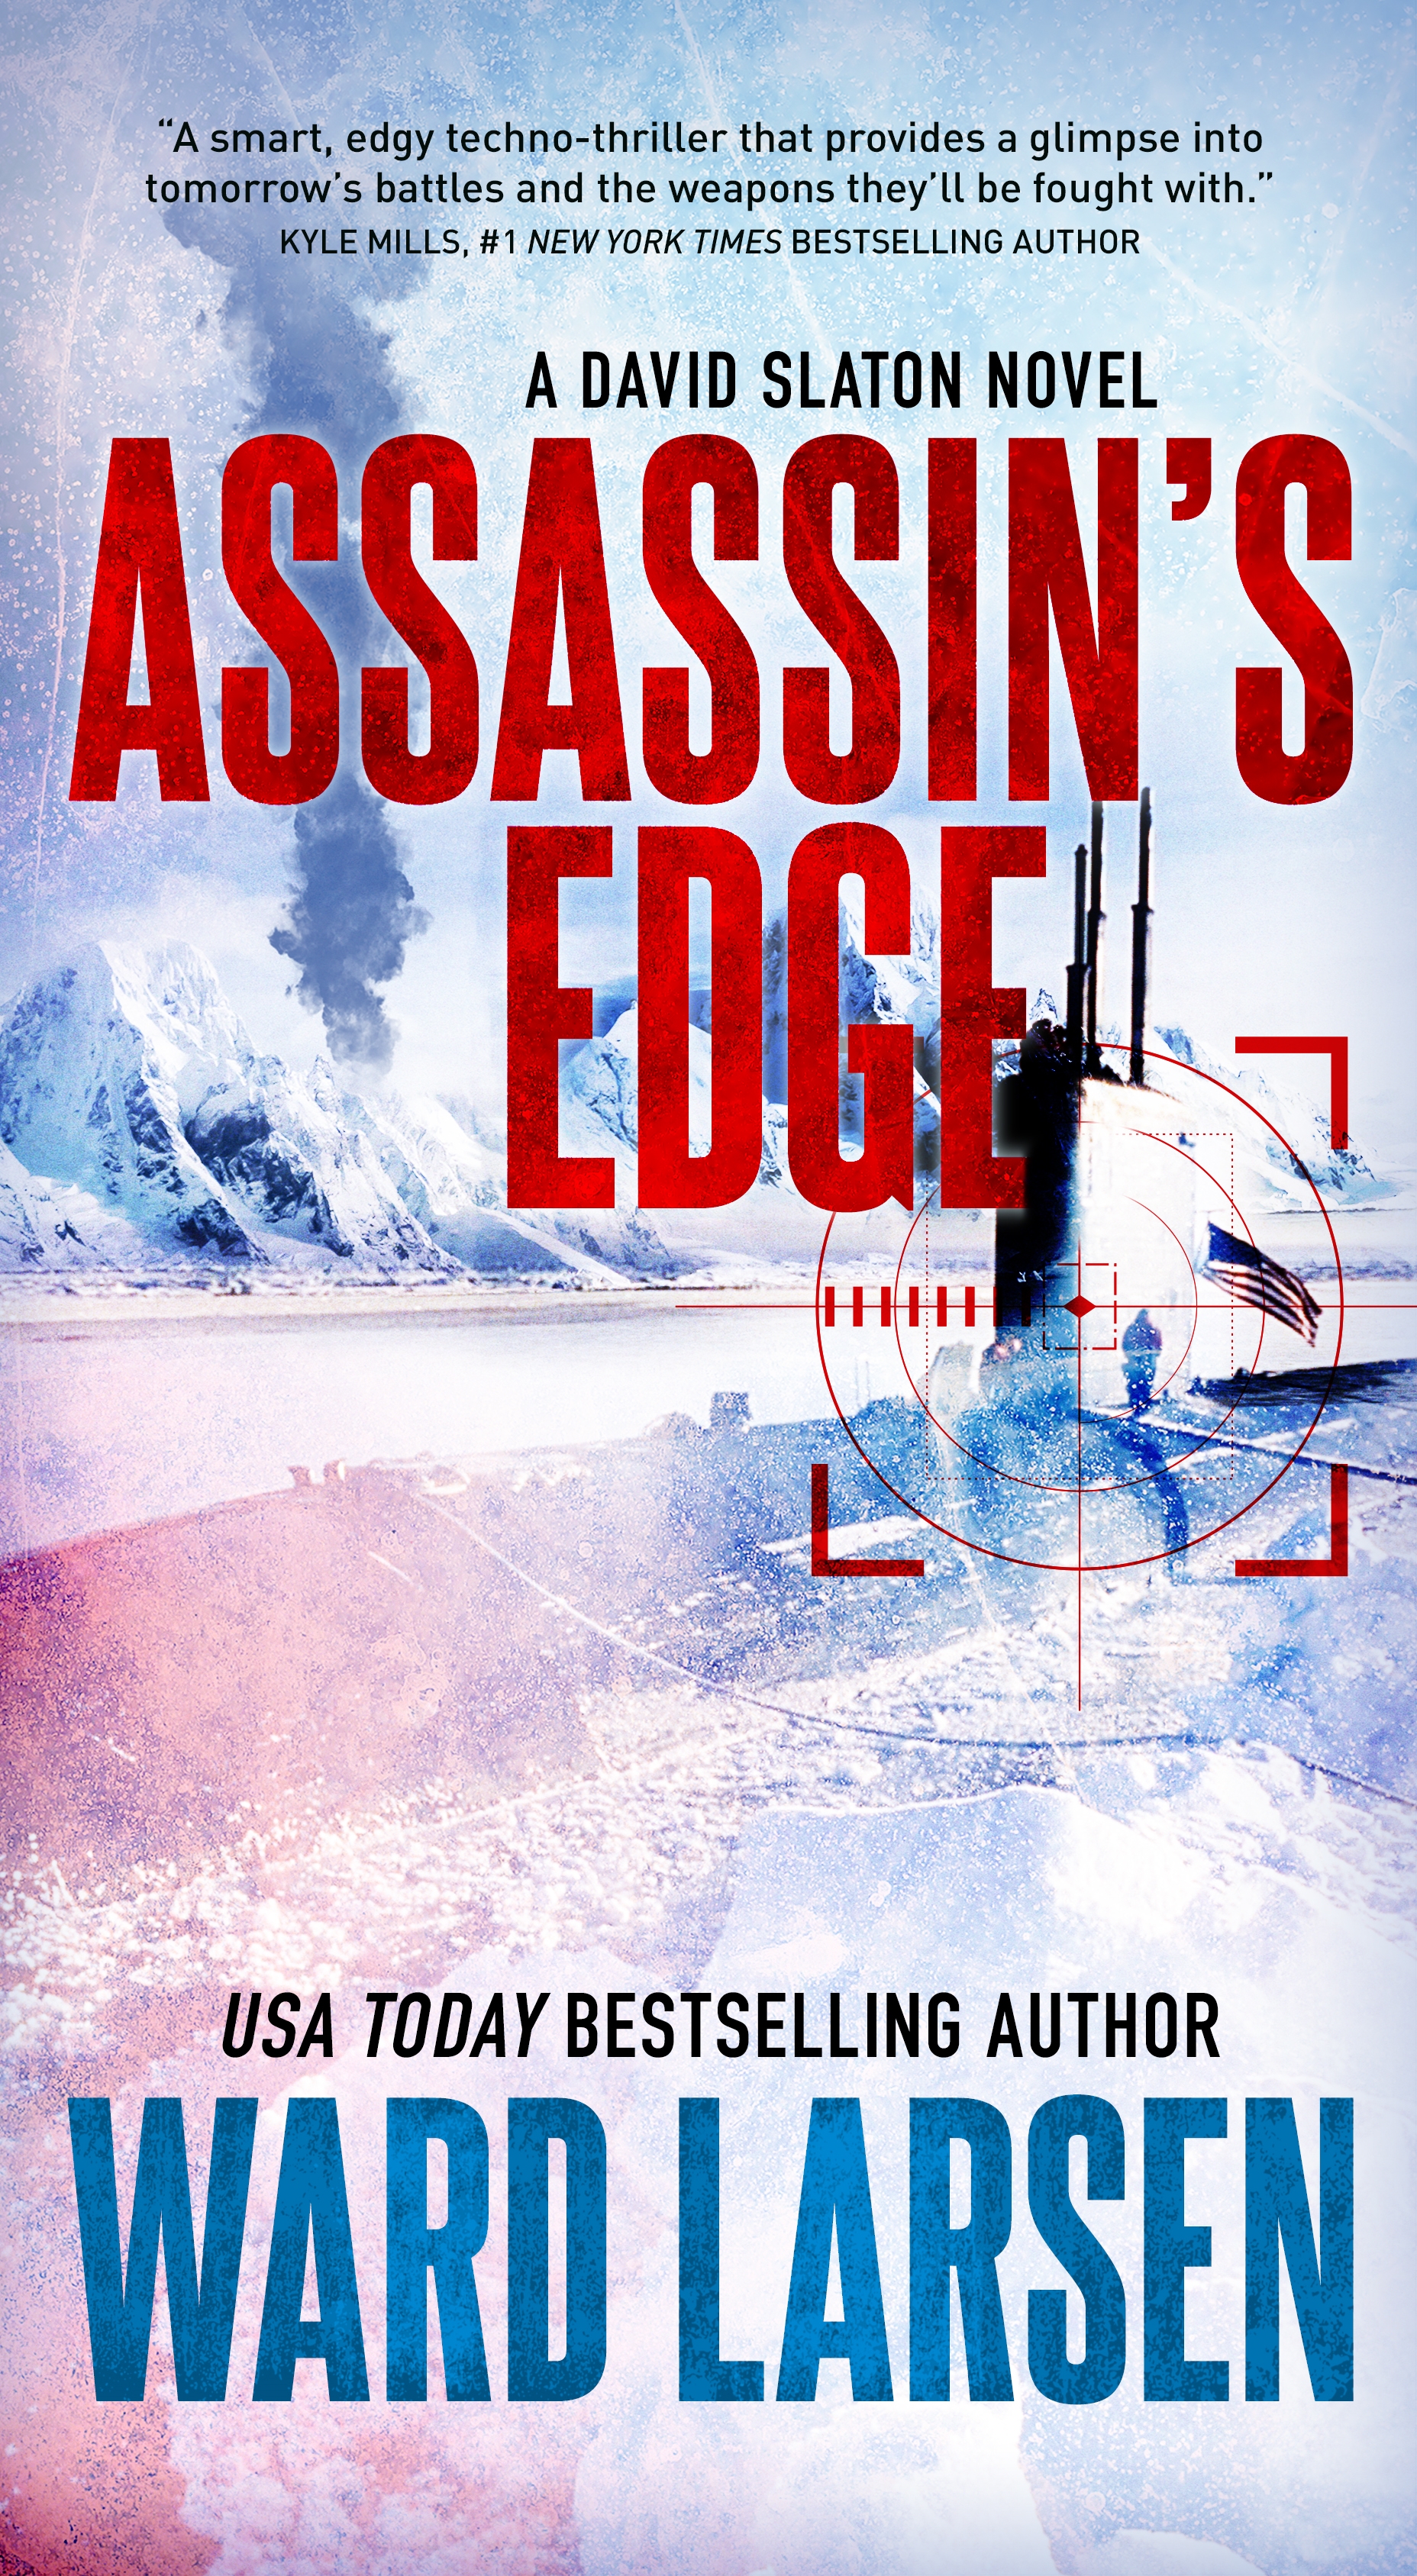 Assassin's Edge : A David Slaton Novel by Ward Larsen